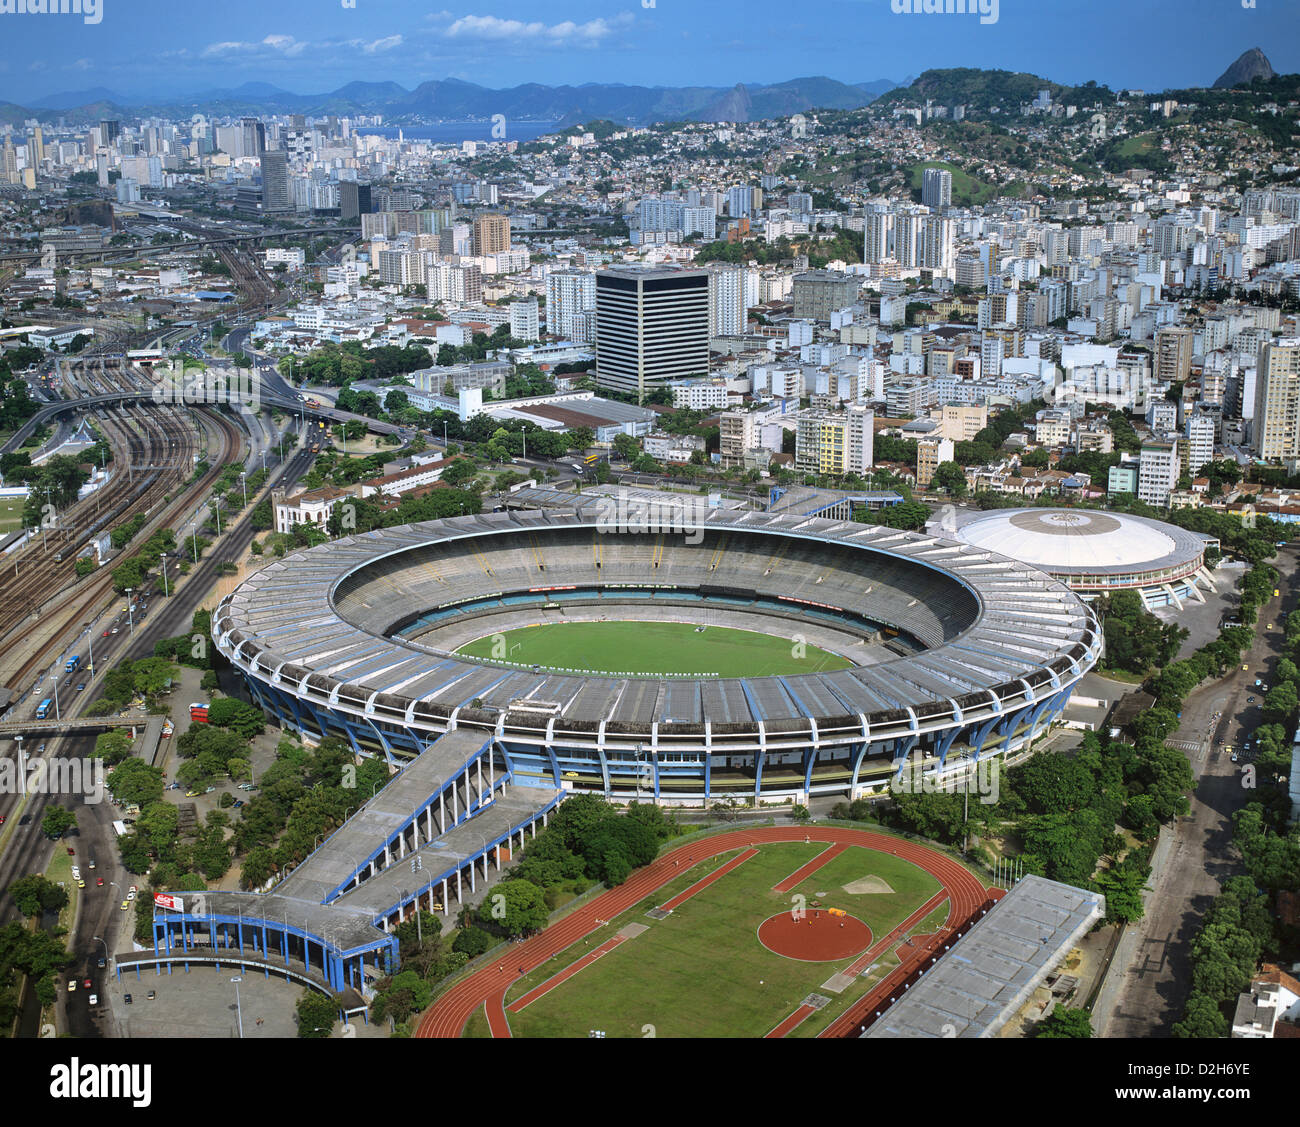 Estádio do Maracanã, Rio de Janeiro, RJ, Brazil - Drone Photography